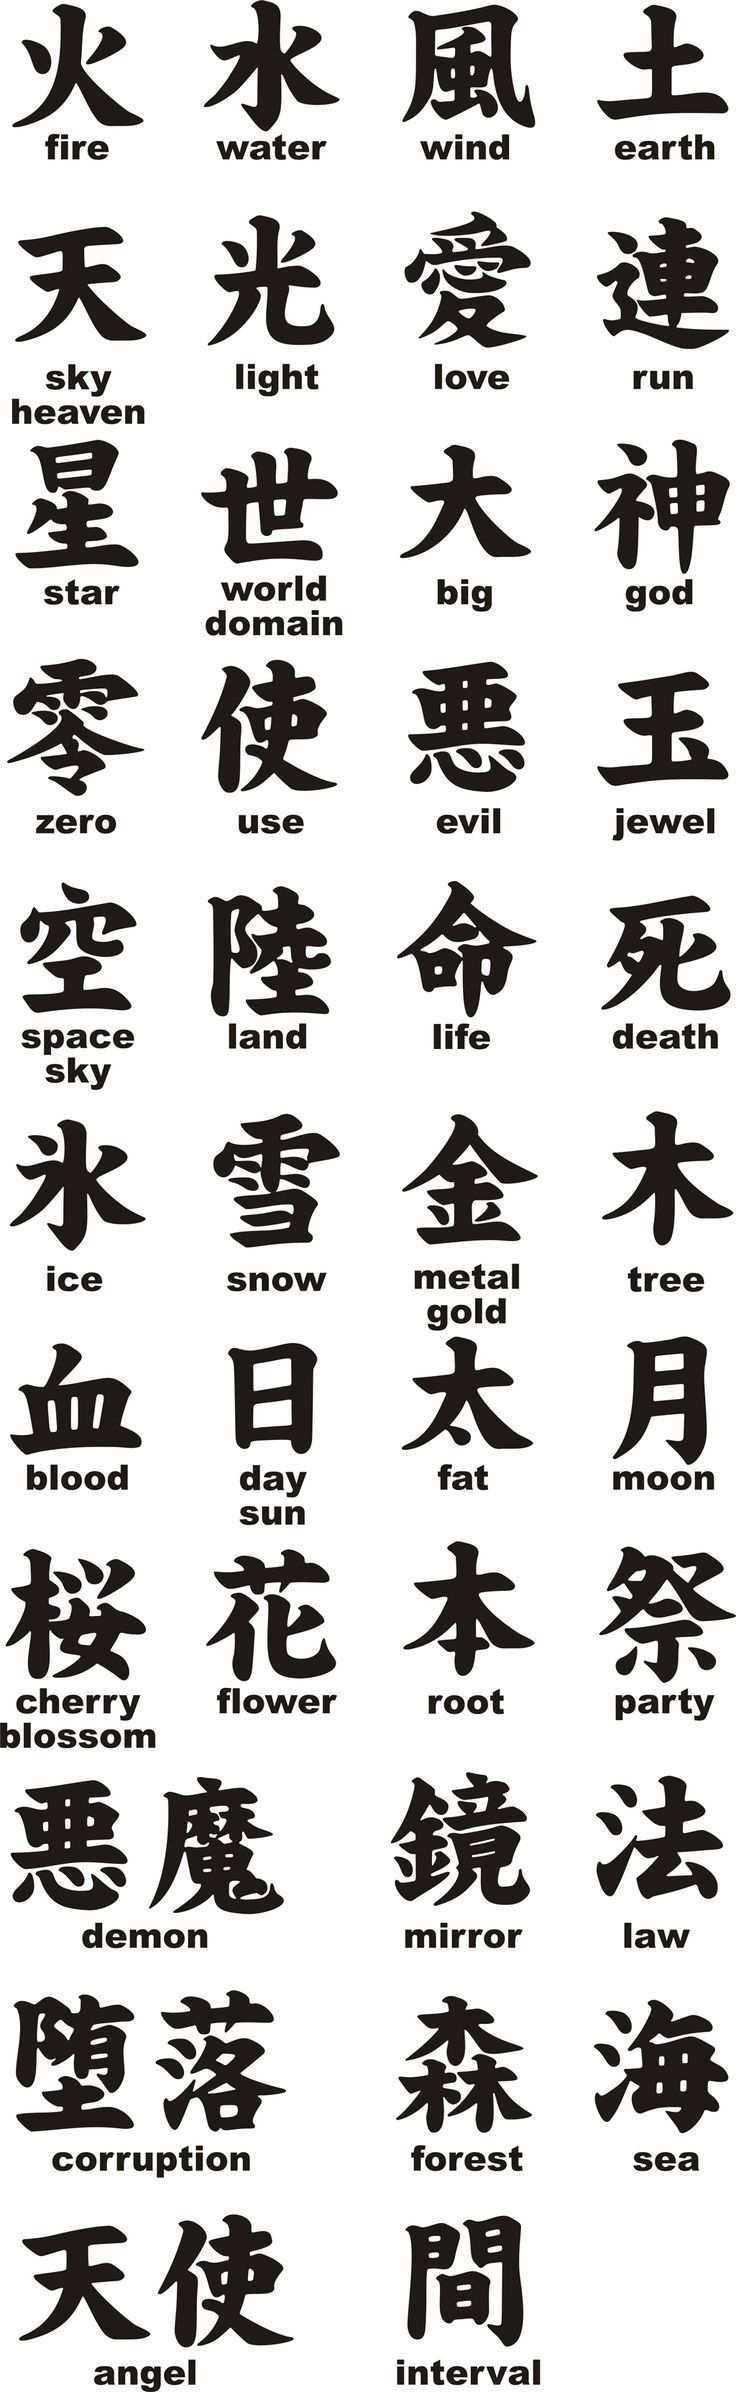 Expat Blogs Anna Kumar Anna Blogs Expat Kumar Chinesische Schriftzeichen Japanische Schriftzeichen Tattoos Chinesische Tattoos